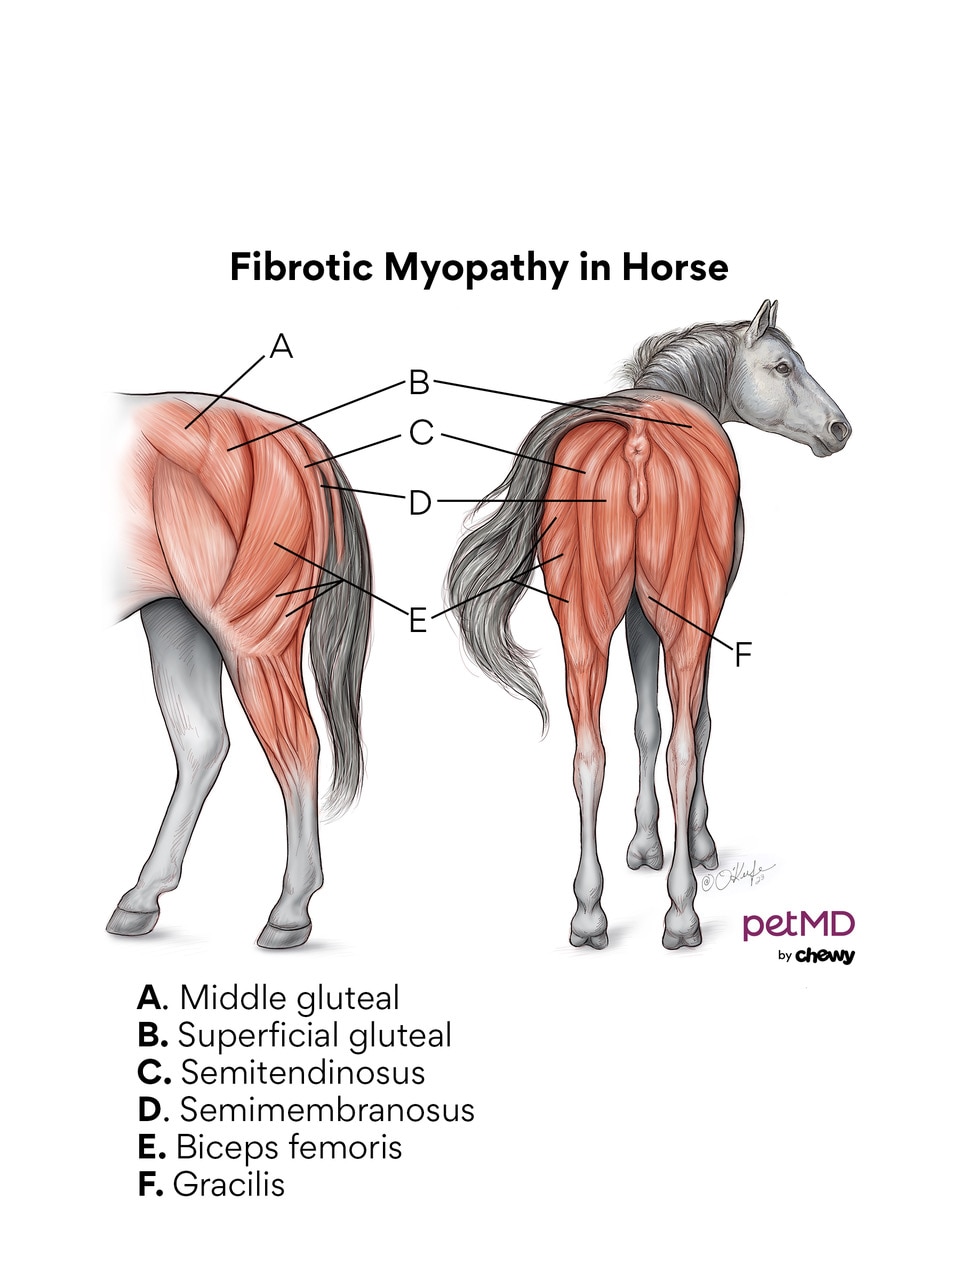 Fibrotic myopathy